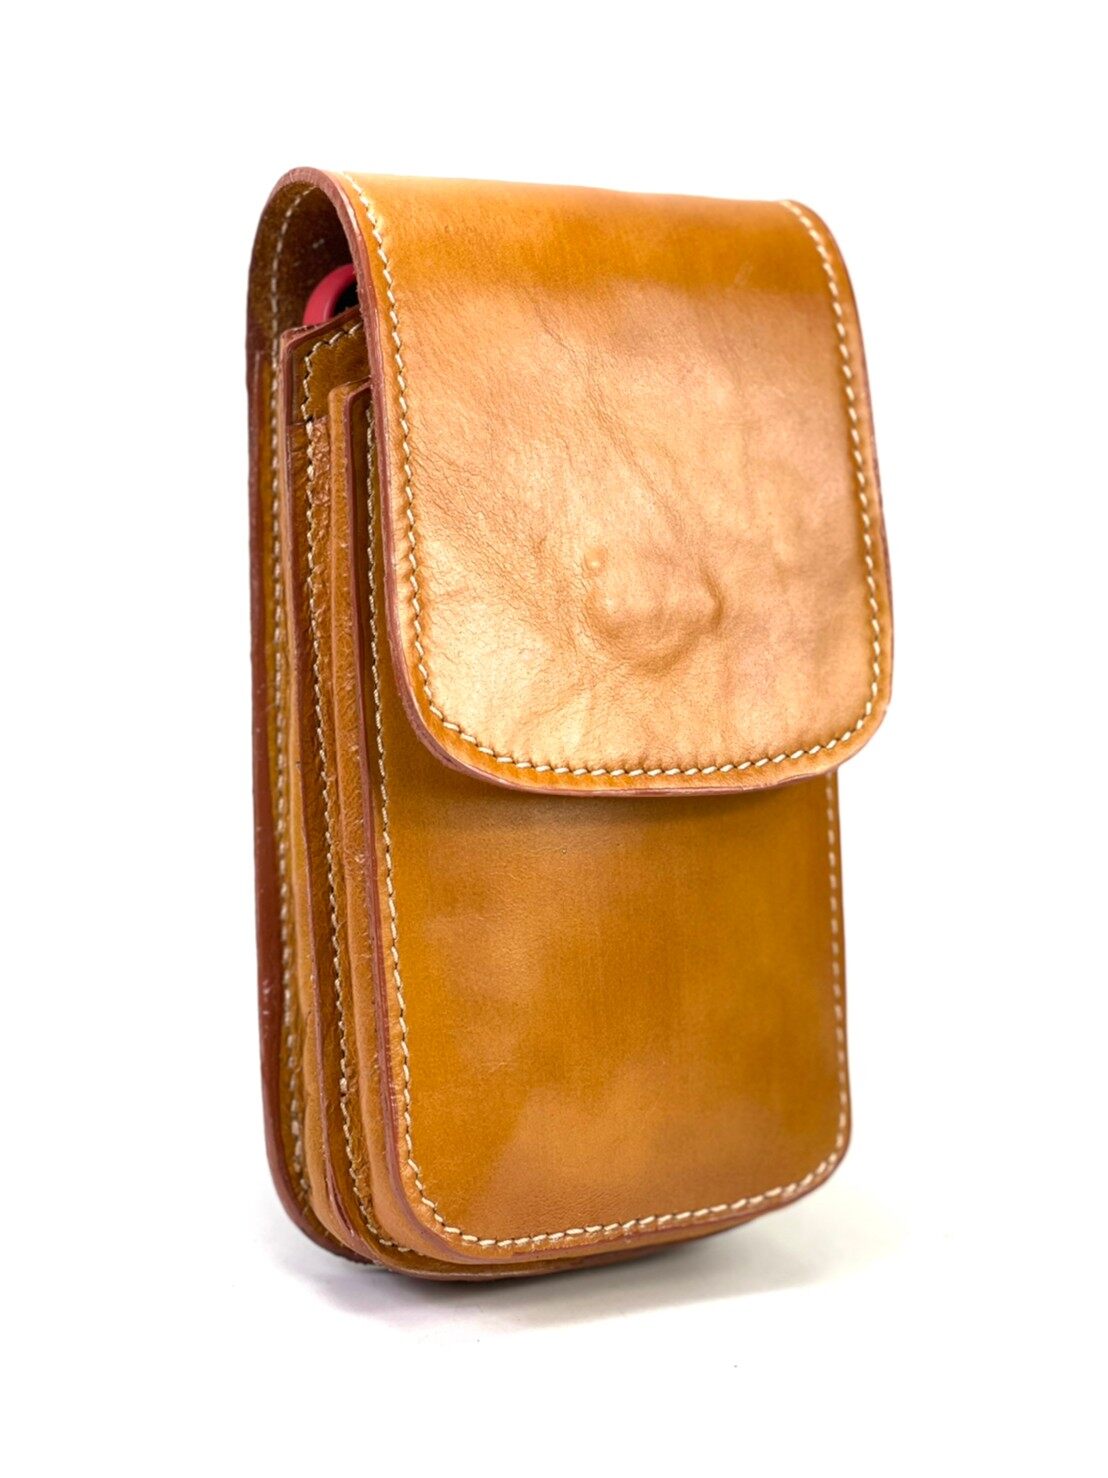 Chinatown Leather กระเป๋ามือถือหนังวัวแท้ร้อยเข็มขัด แนวตั้ง iphone 6-7-8 พลัสได้ 2 เครื่อง สีน้ำตาลเข้ม ดำ